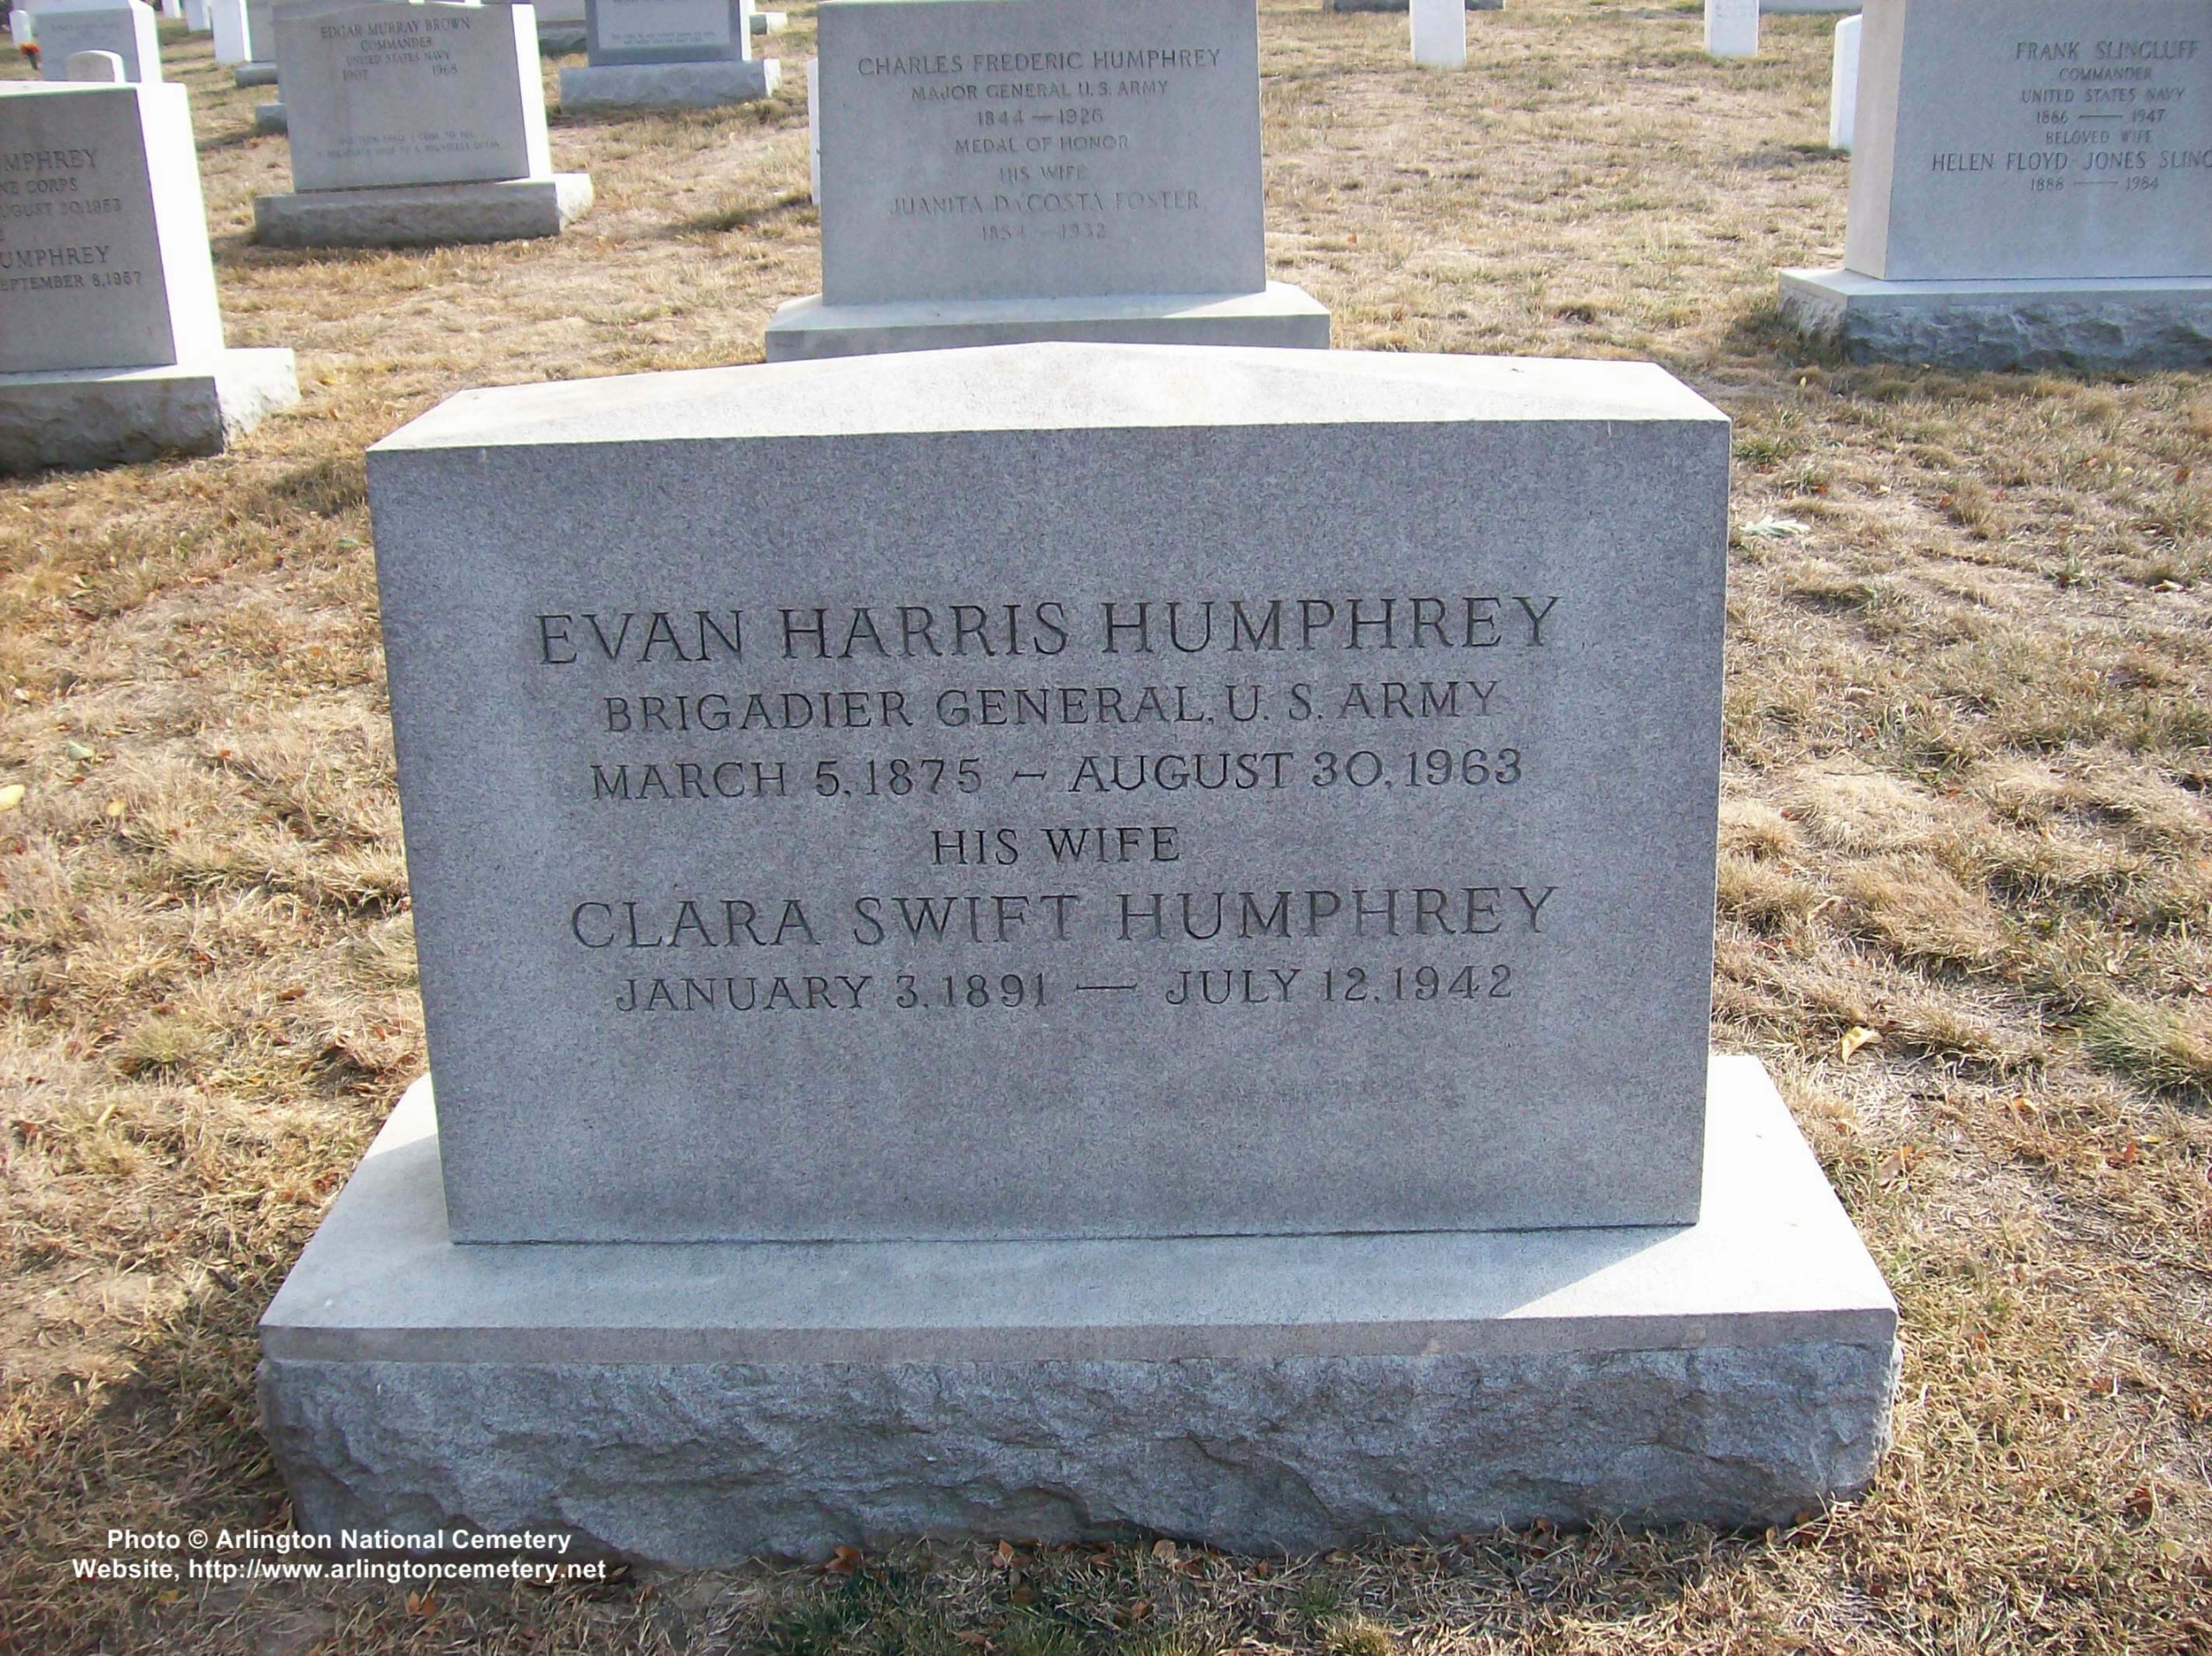 ehhumphrey-gravesite-photo-october-2007-001